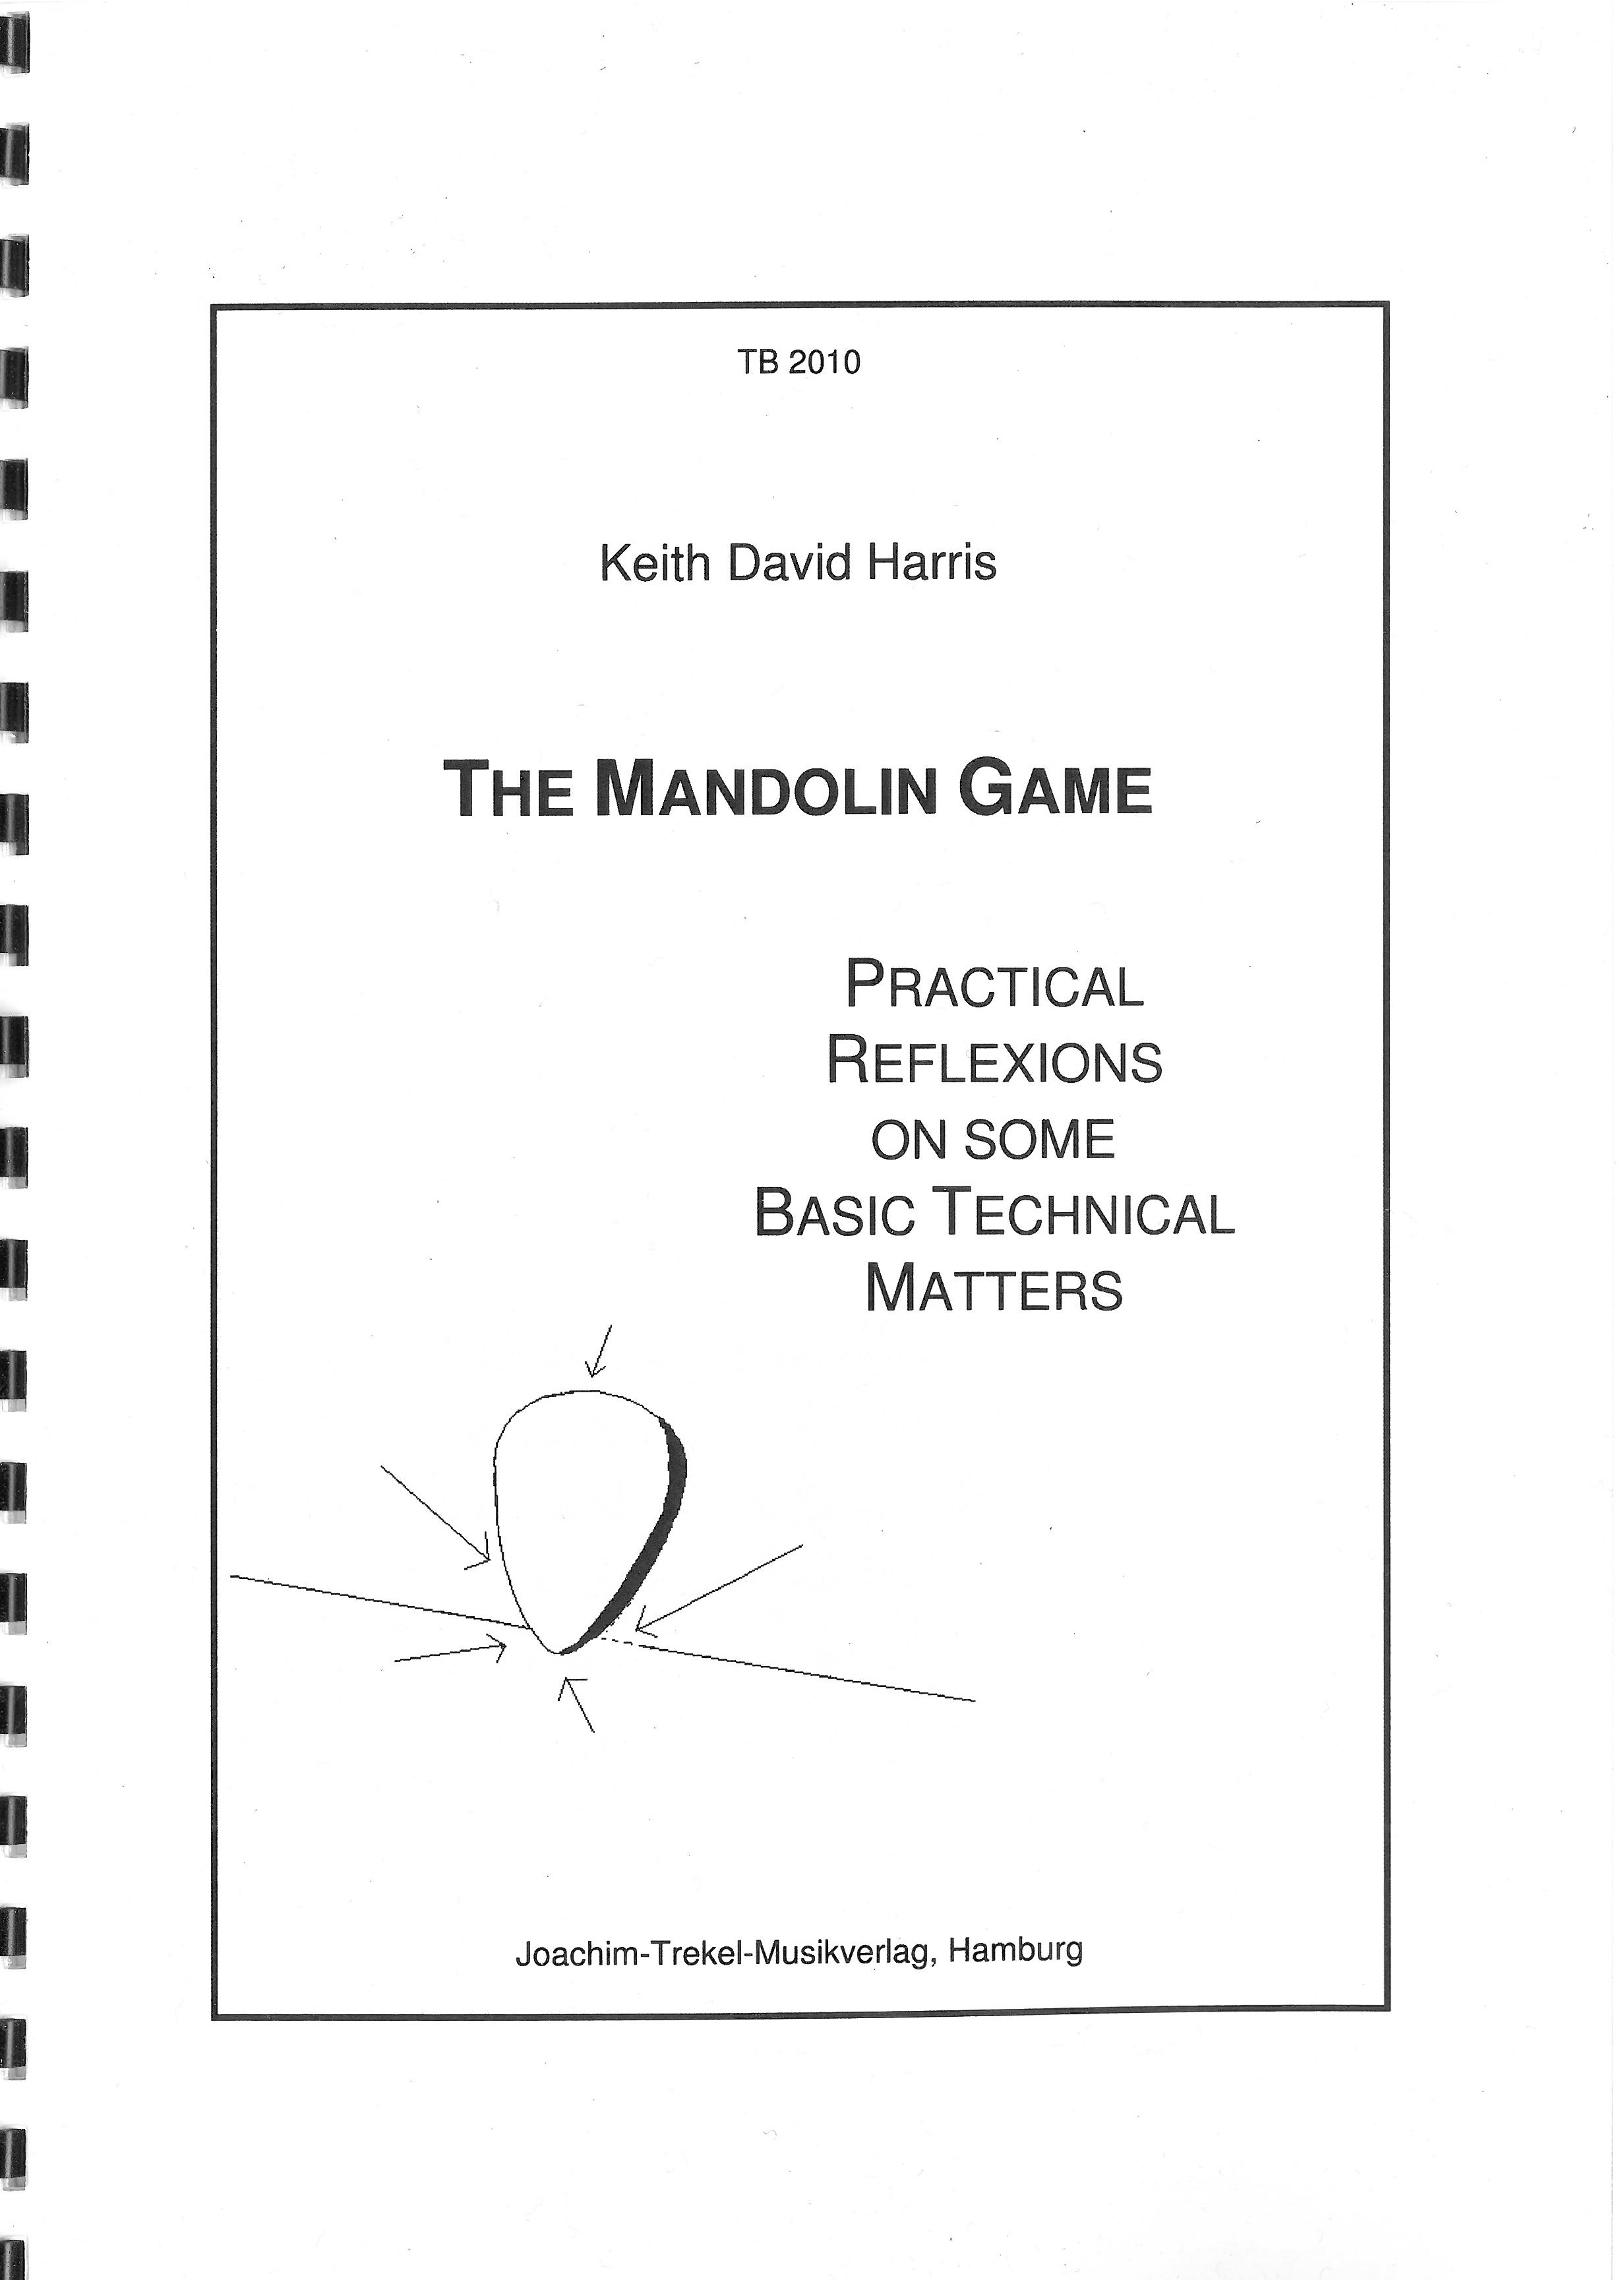 The Mandolin Game